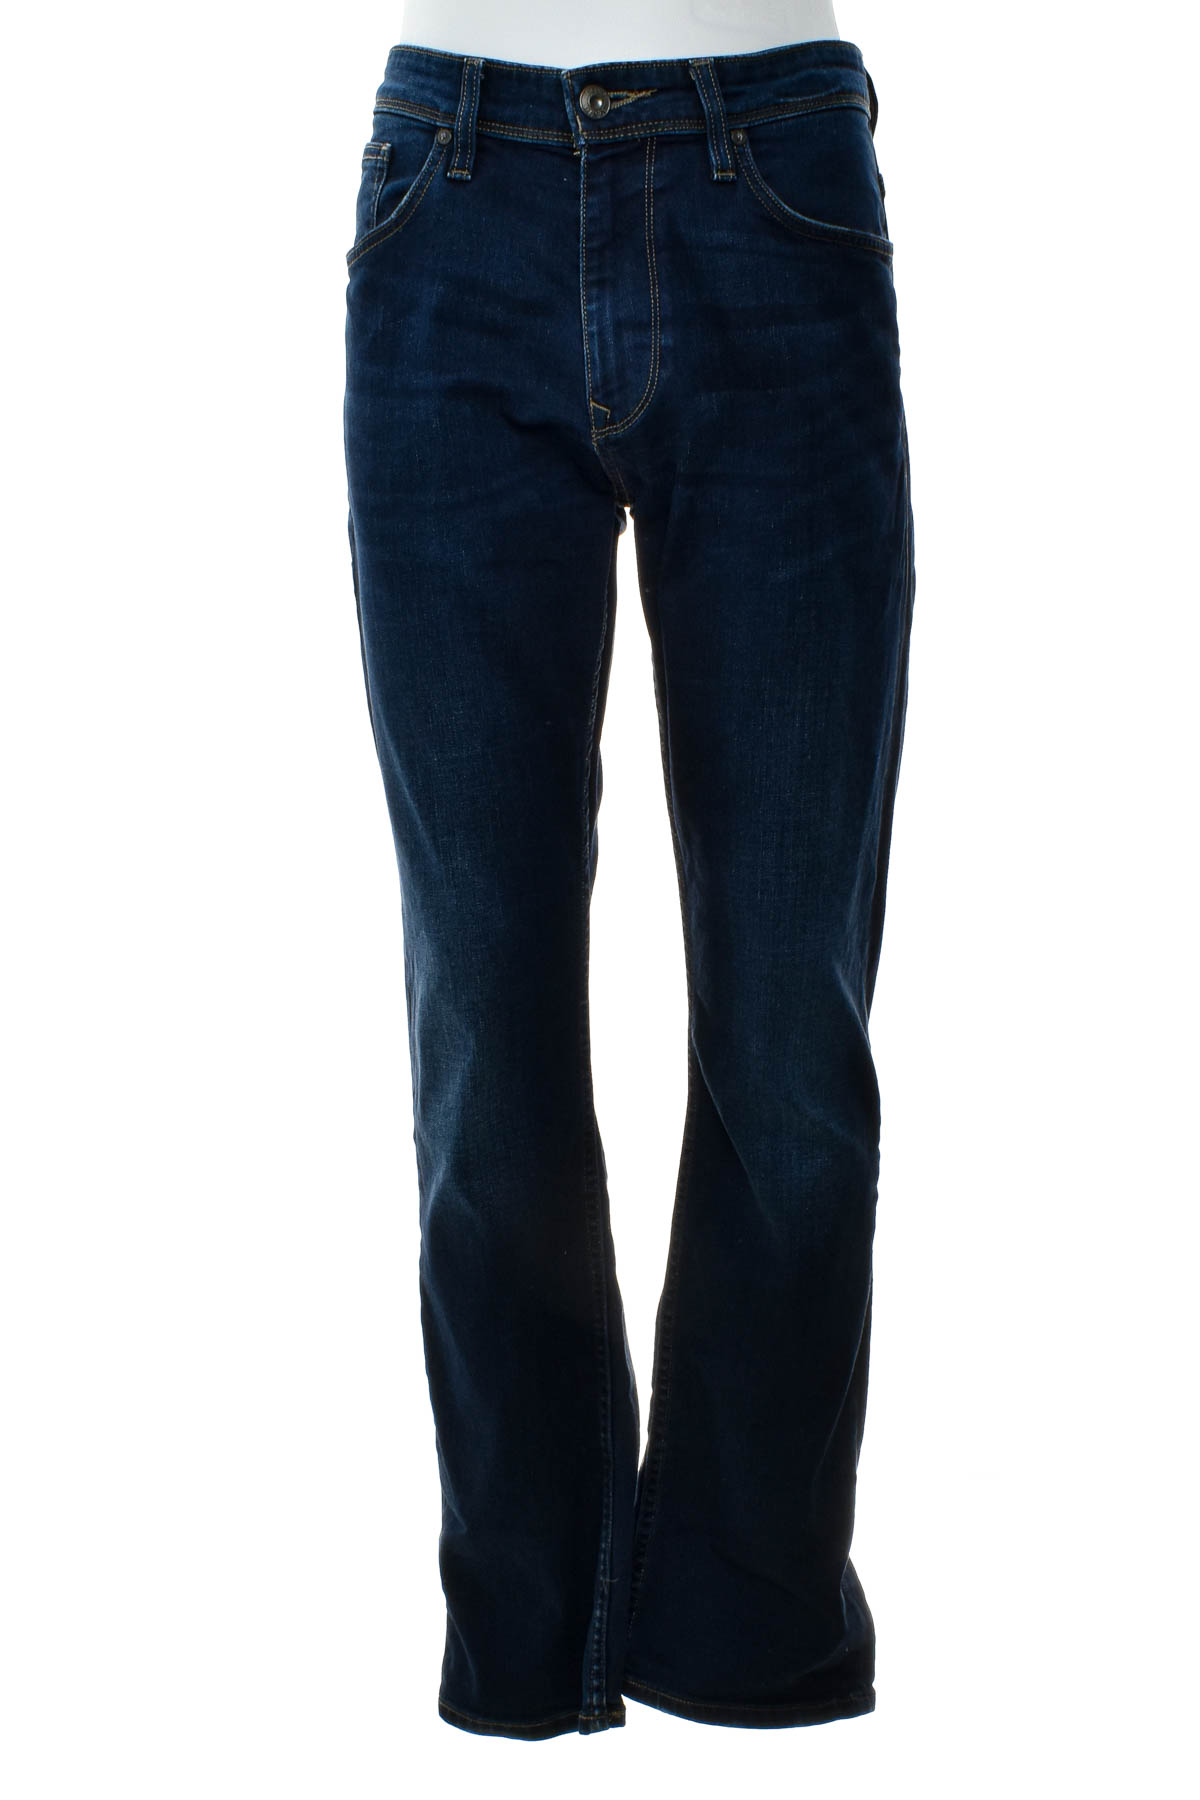 Men's jeans - Celio* - 0